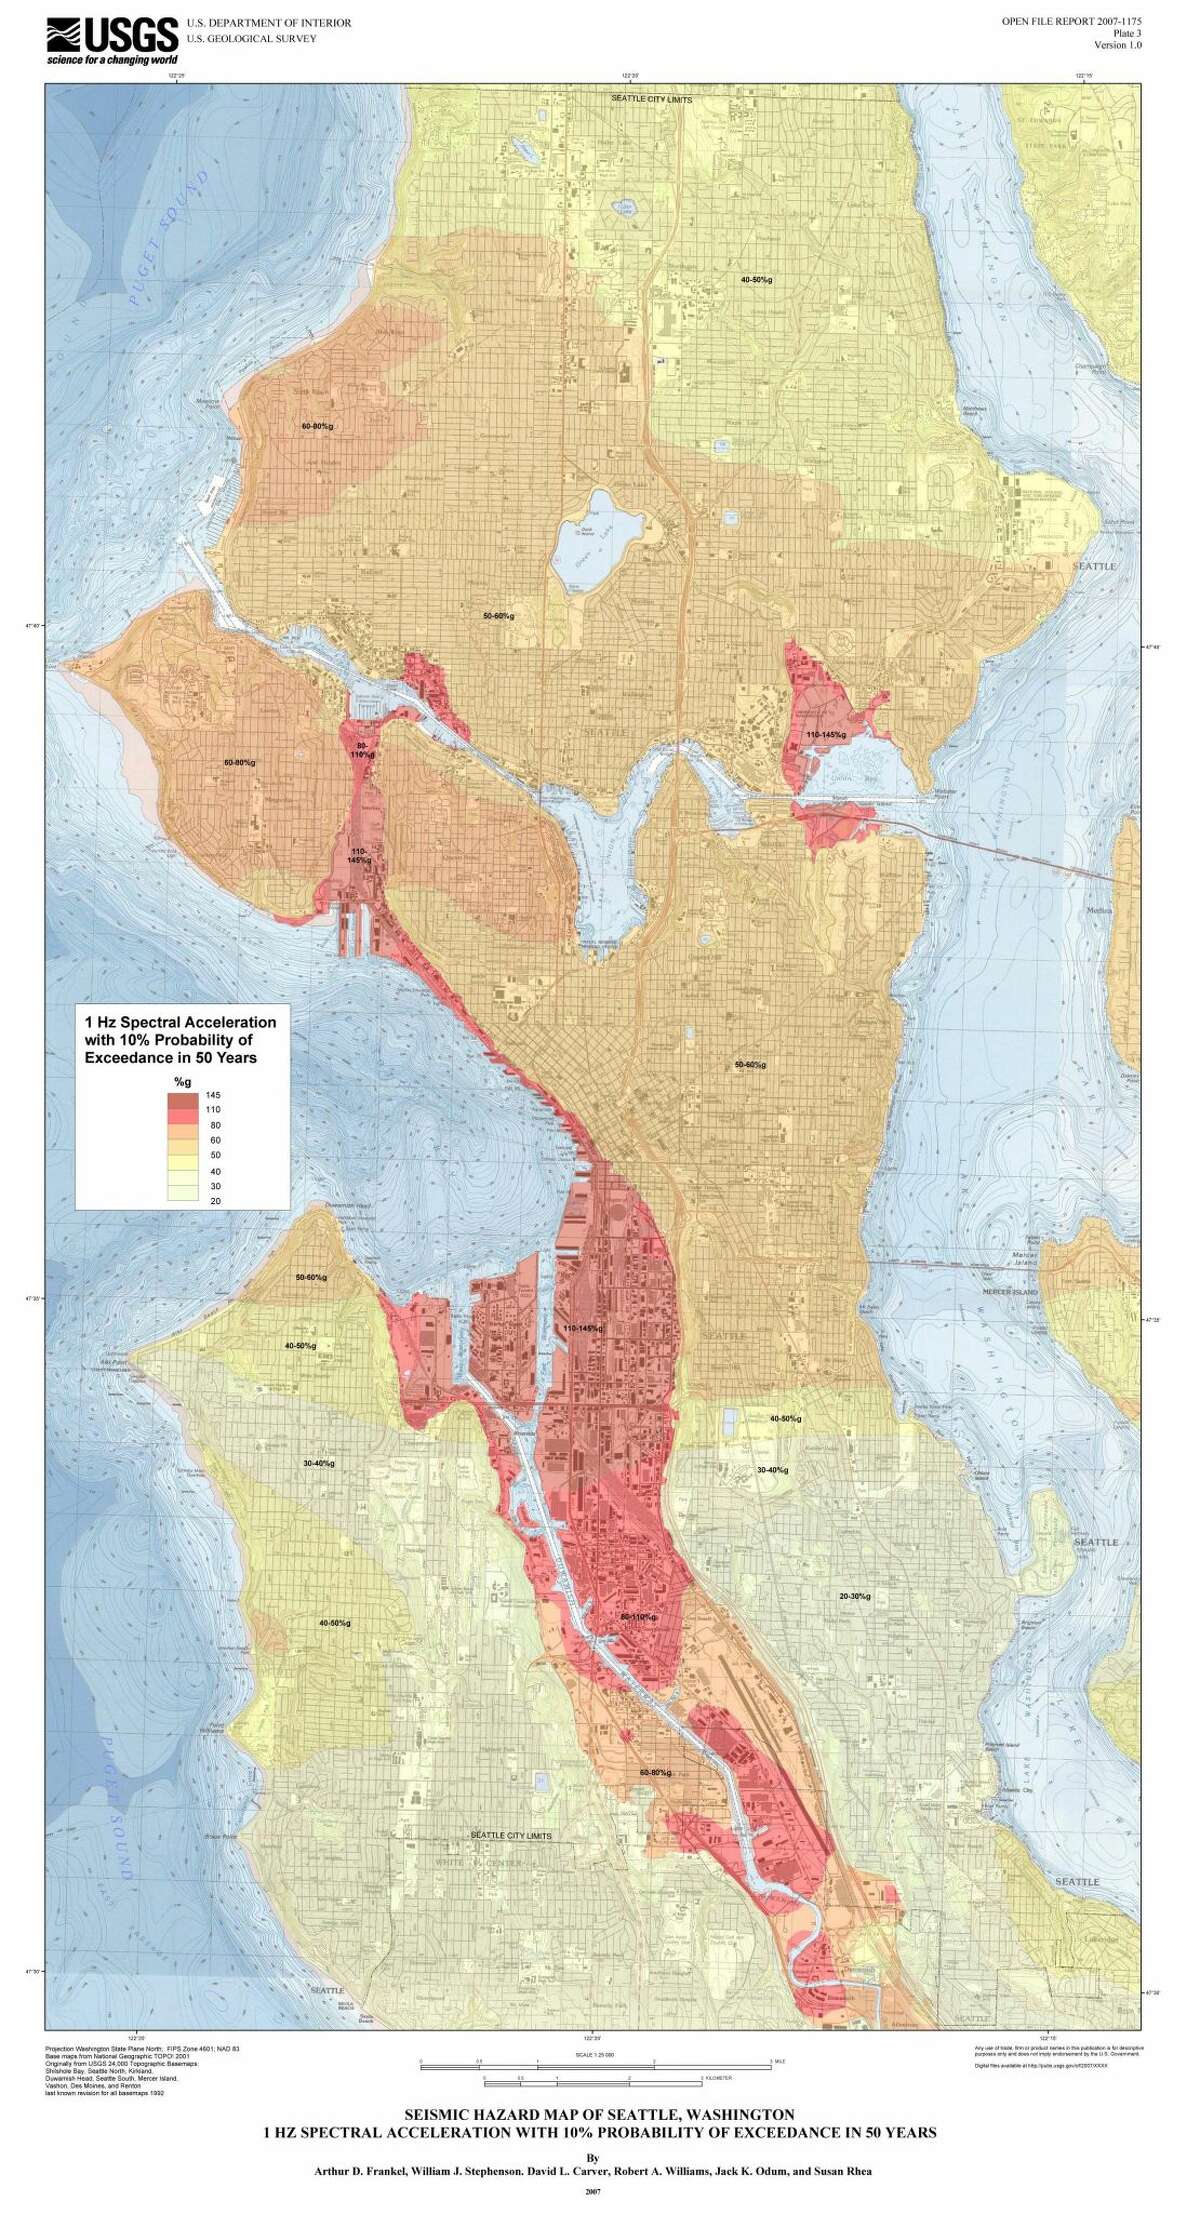 Where an earthquake will hit Seattle hardest